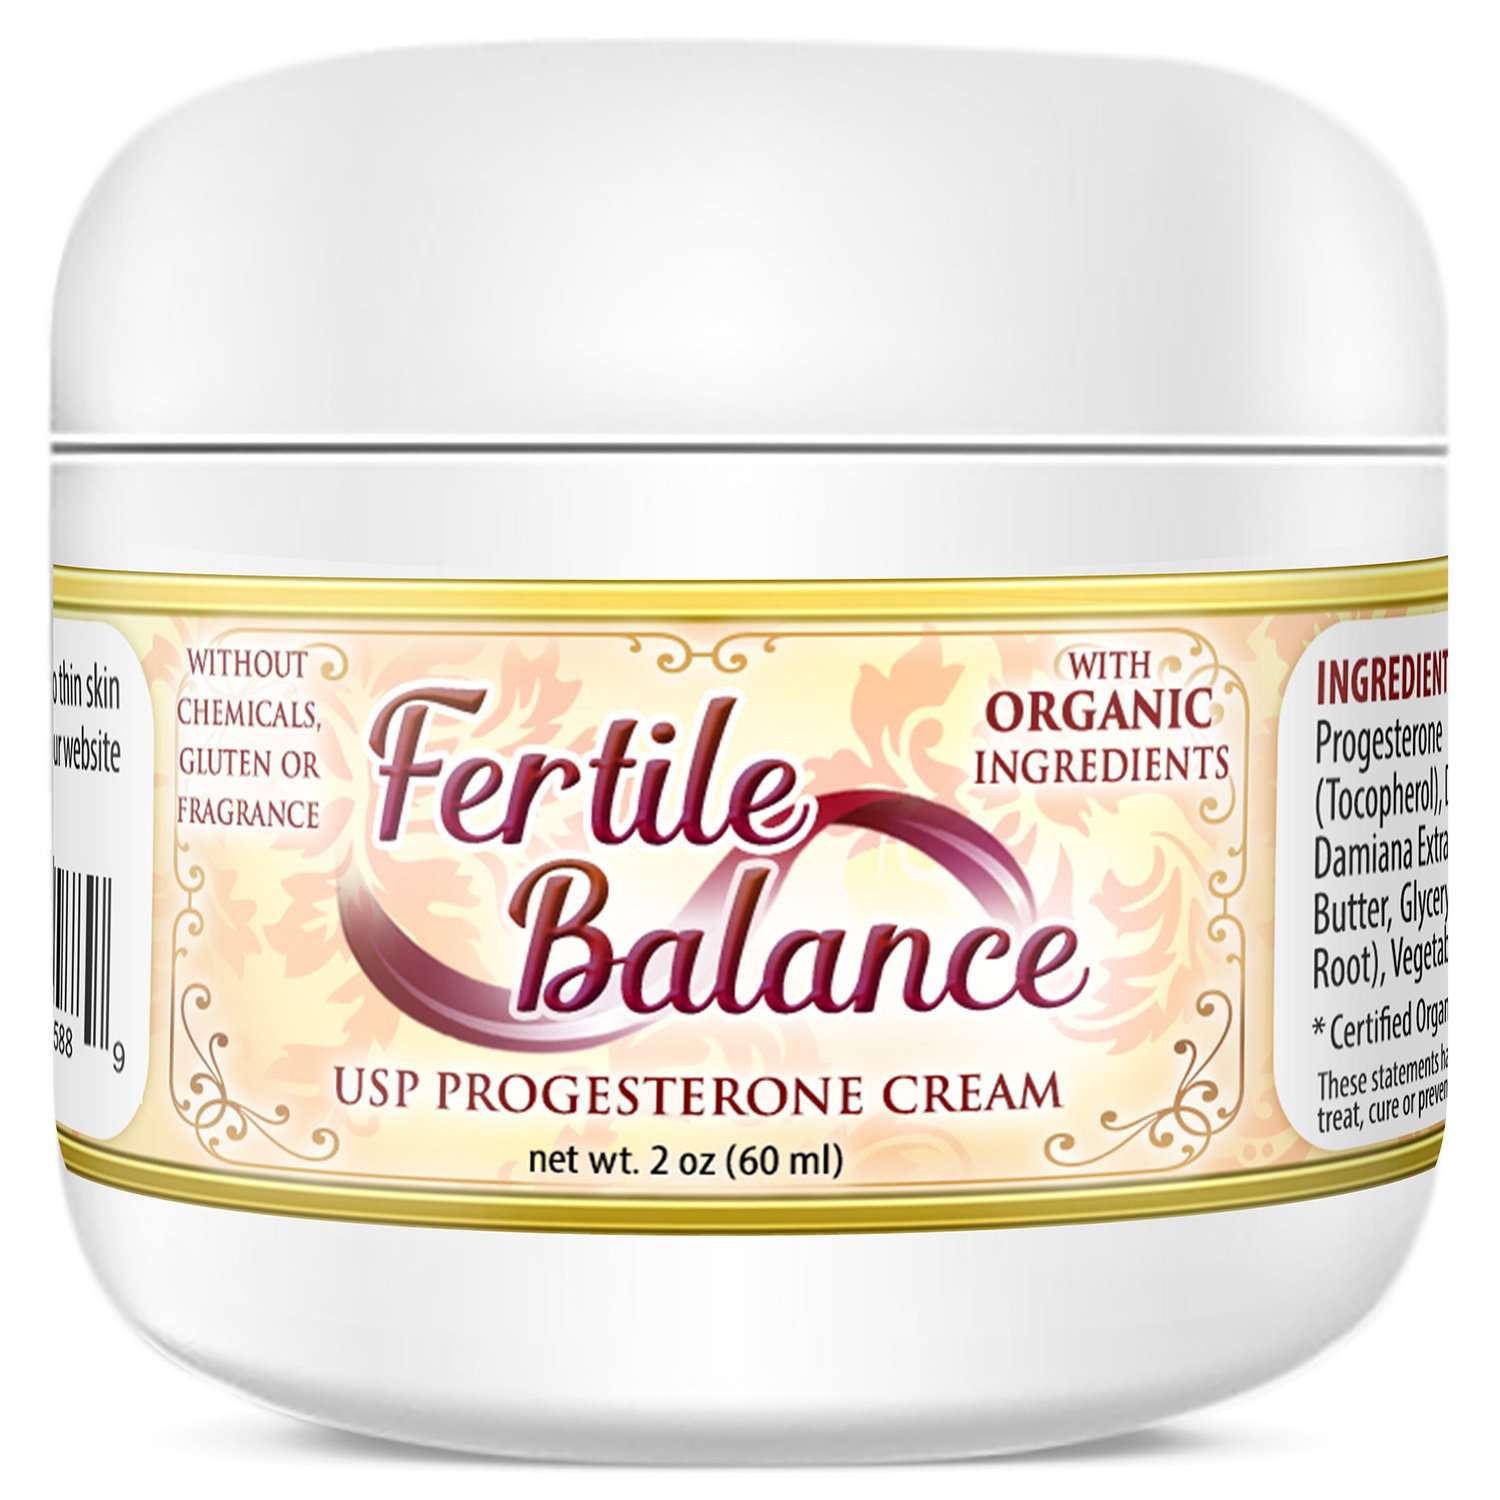 Fertile Balance Bioidentical Progesterone Cream 2 oz ...